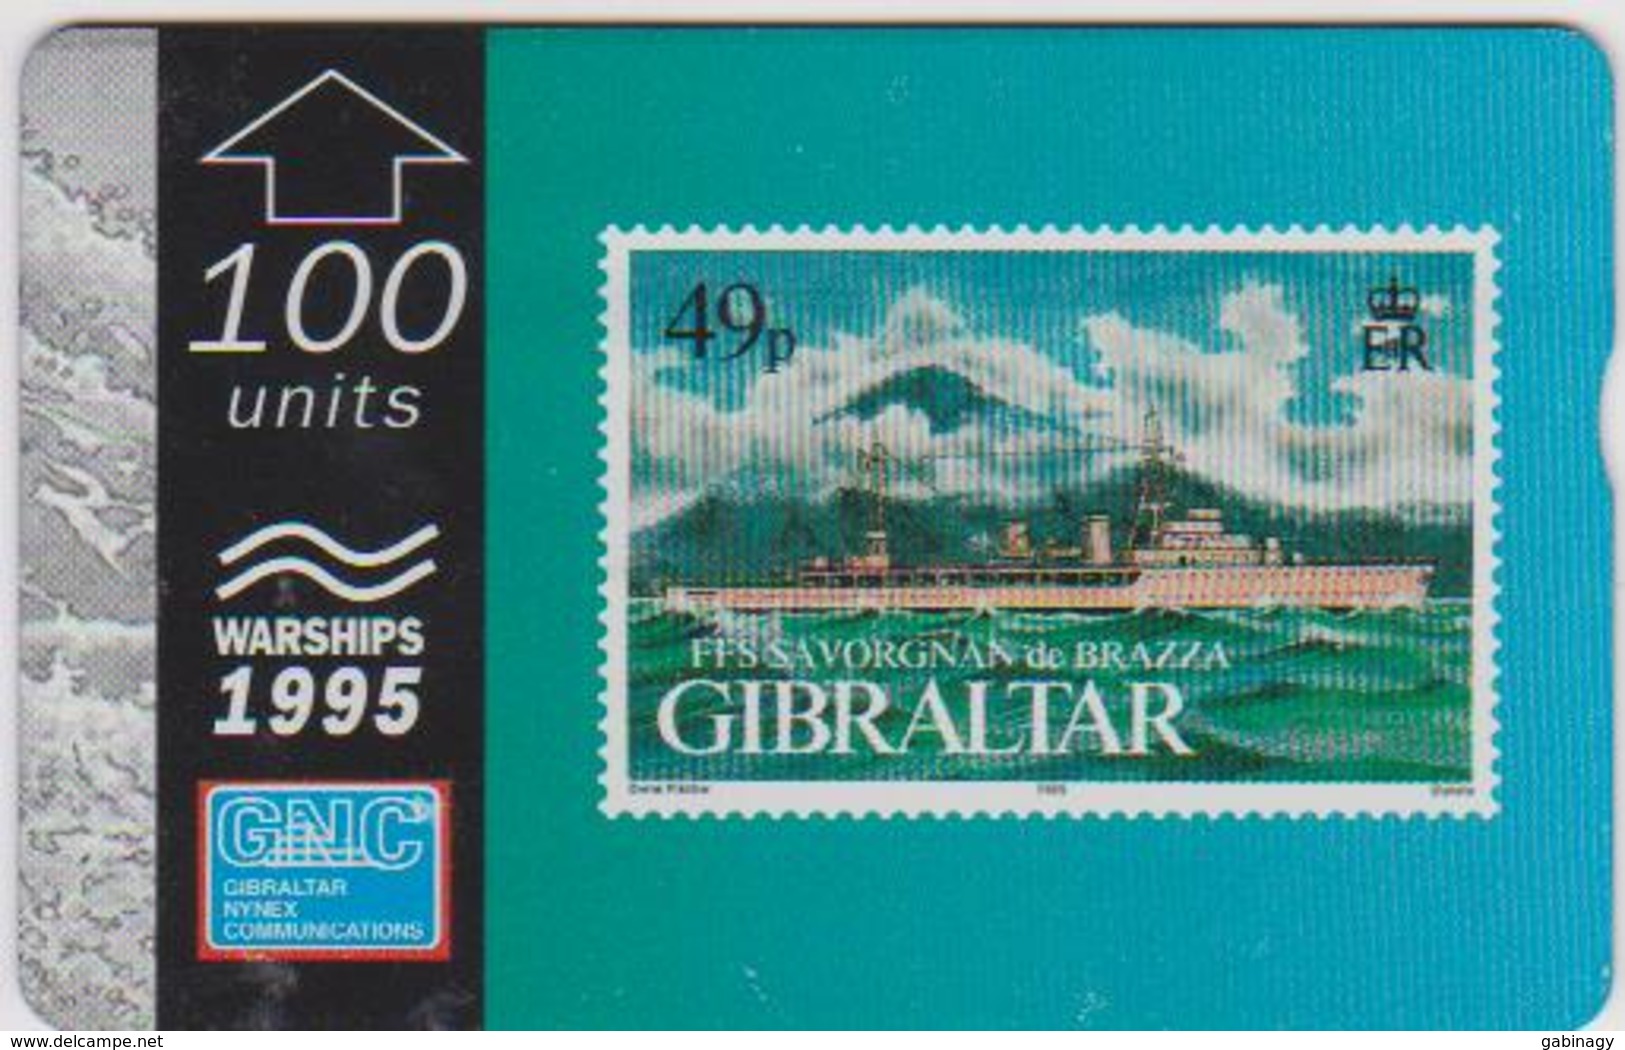 #03 - GIBRALTAR-14 - FSS SAVORGNAN DE BRAZZA - STAMP - 511L - Gibraltar